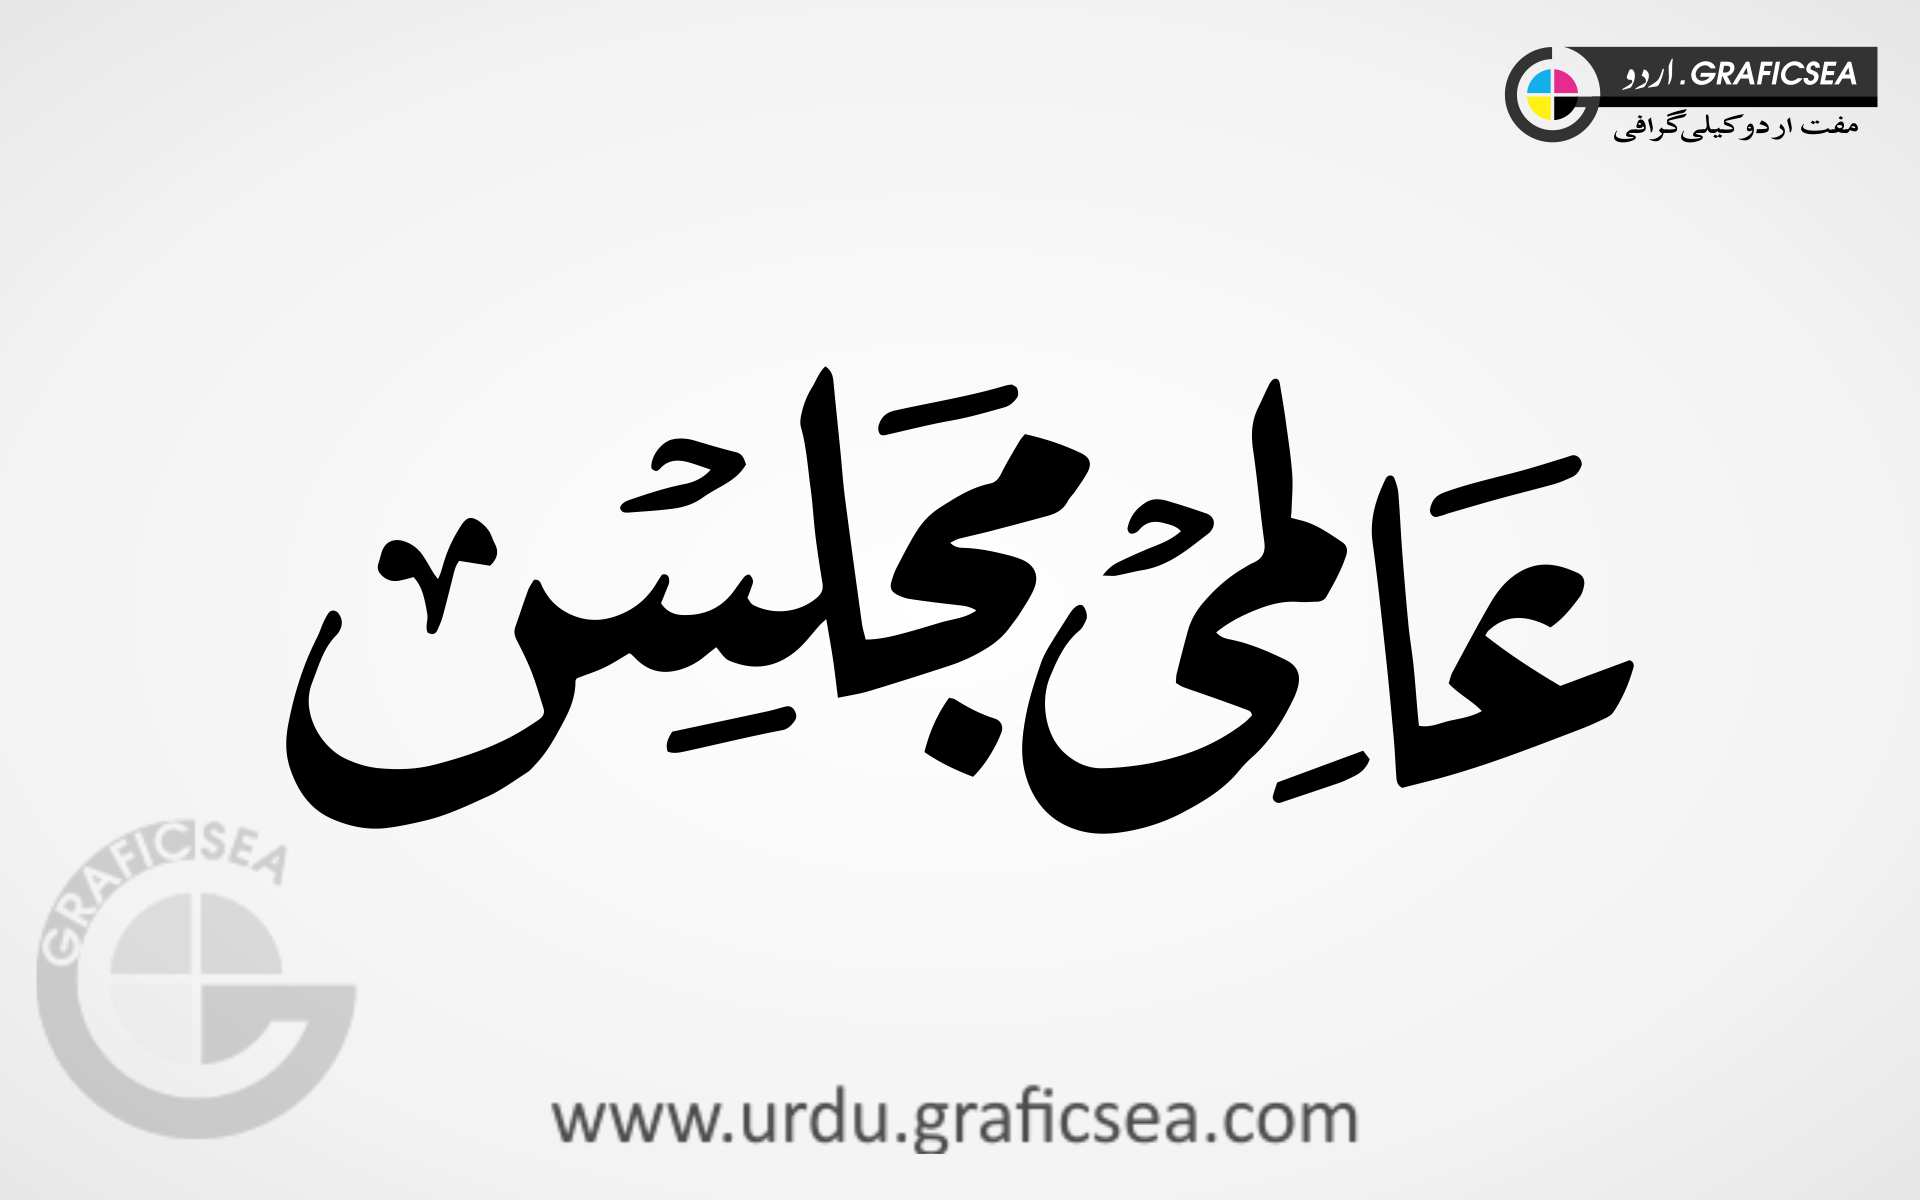 Alimi Majlis Mehfil Poster Word Urdu Calligraphy